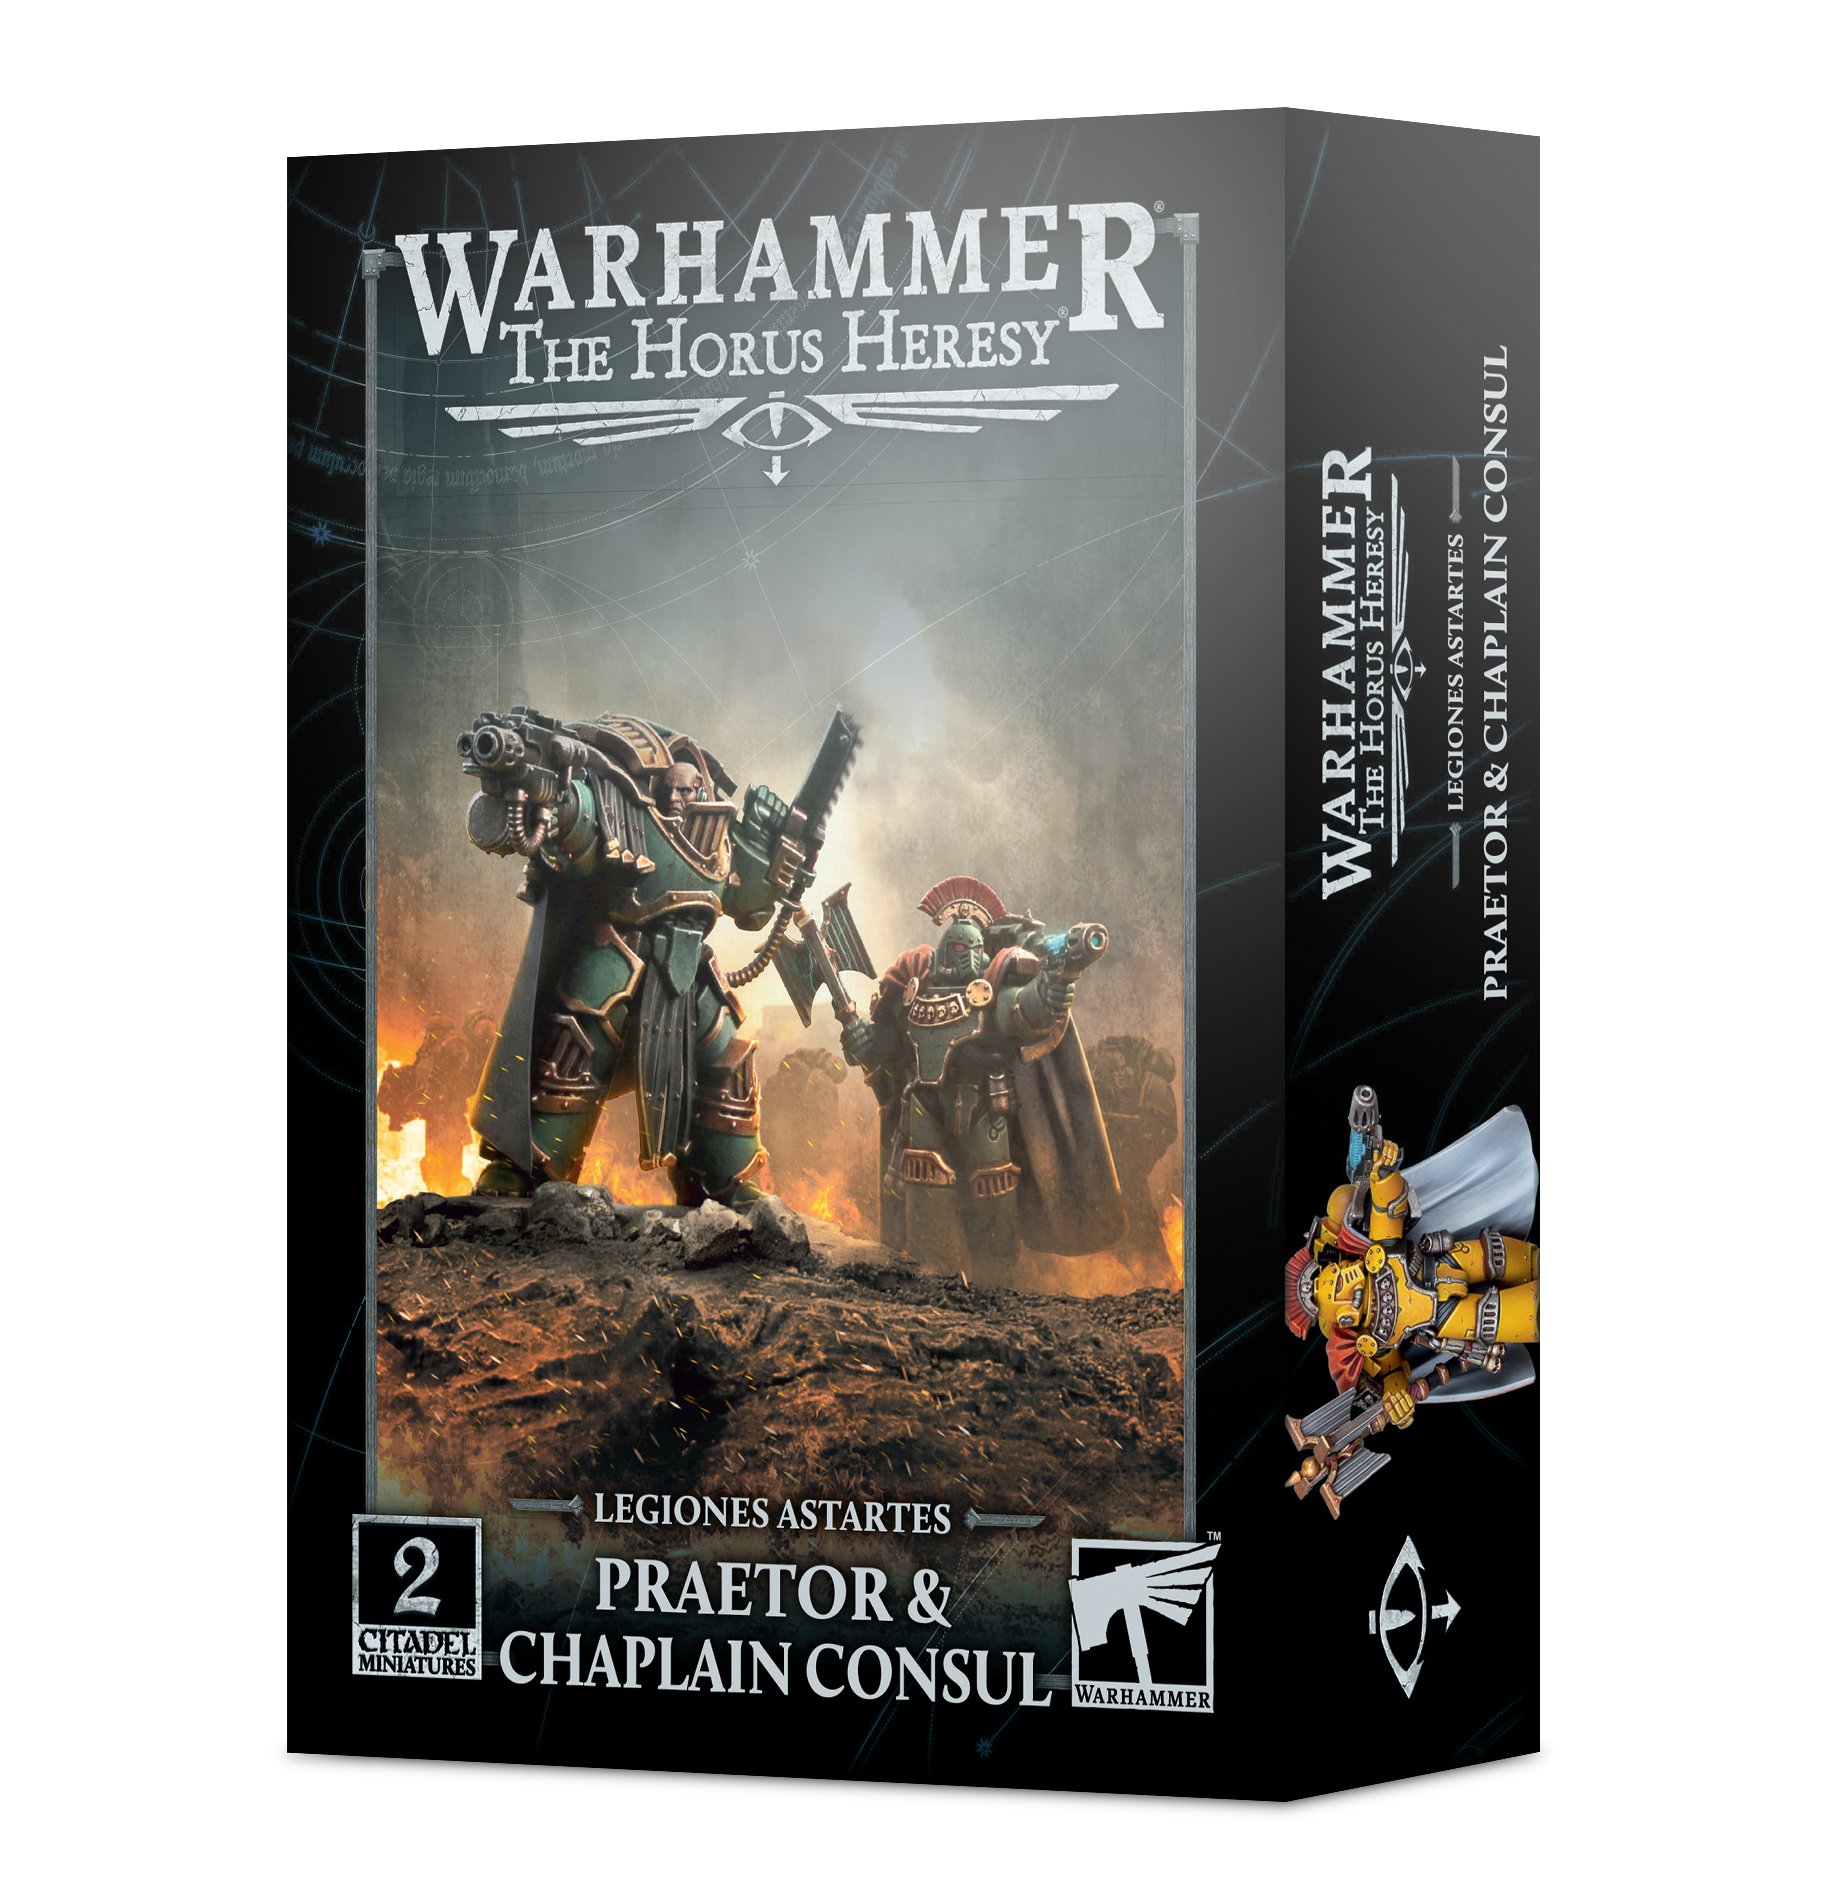 Praetor & Chaplain Consul - Legiones Astartes - 31-08 - Warhammer The Horus Heresy